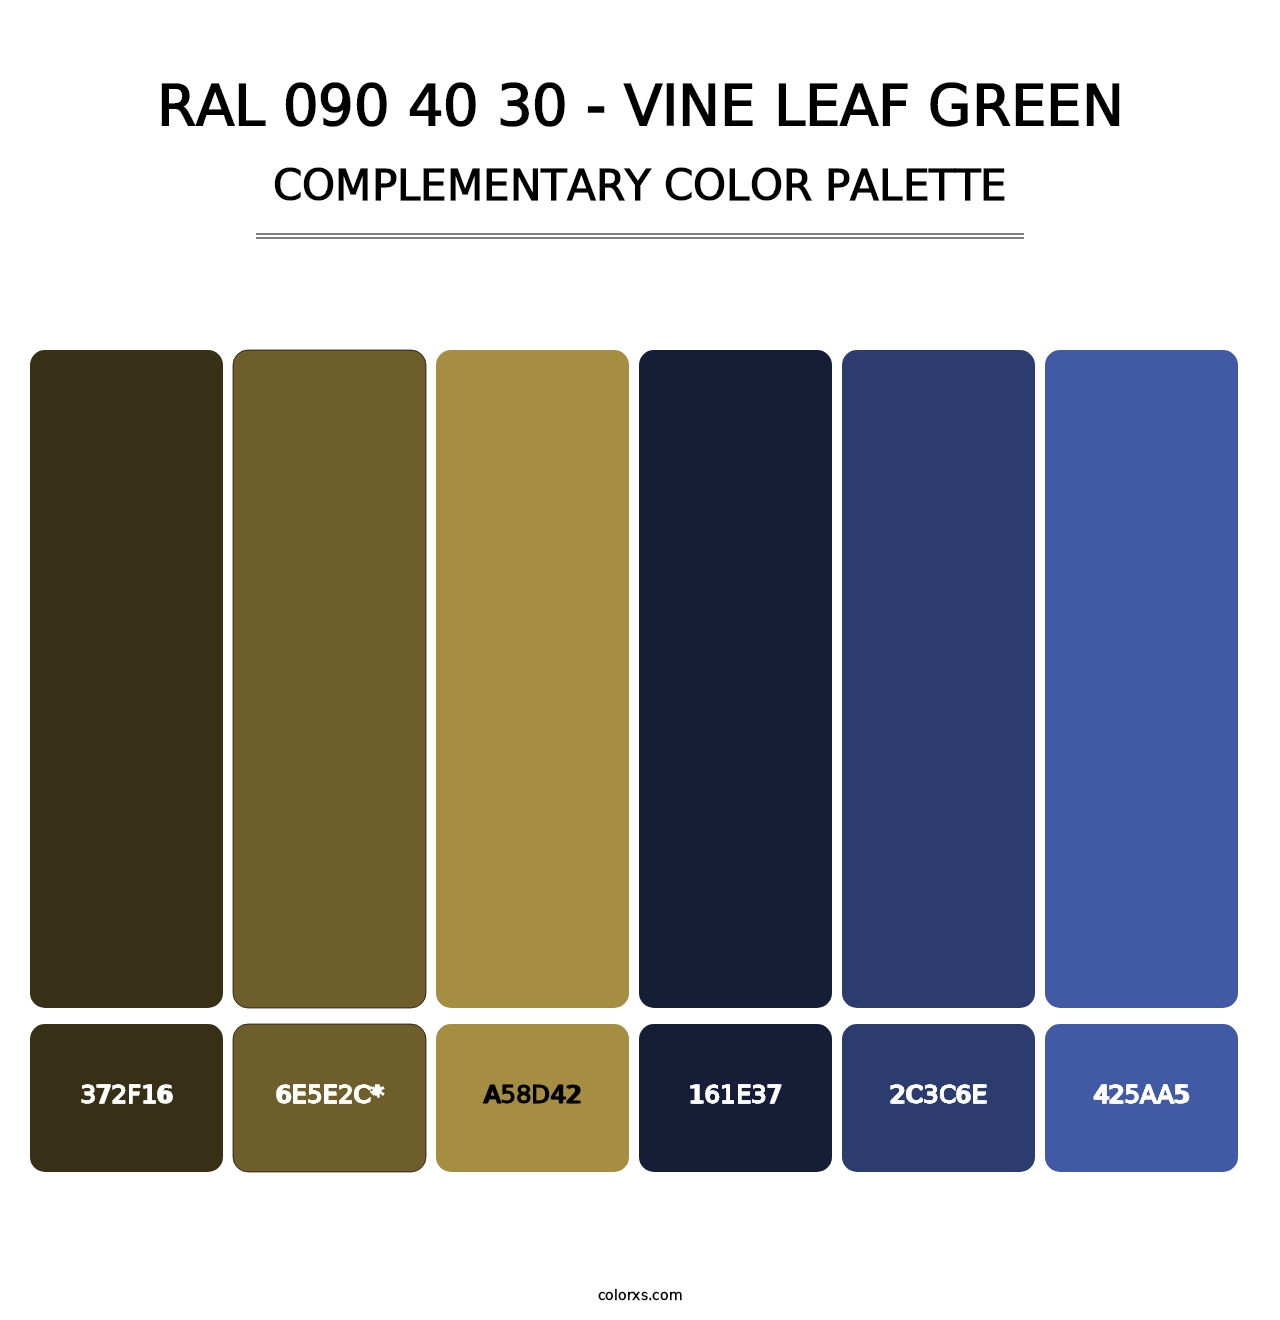 RAL 090 40 30 - Vine Leaf Green - Complementary Color Palette